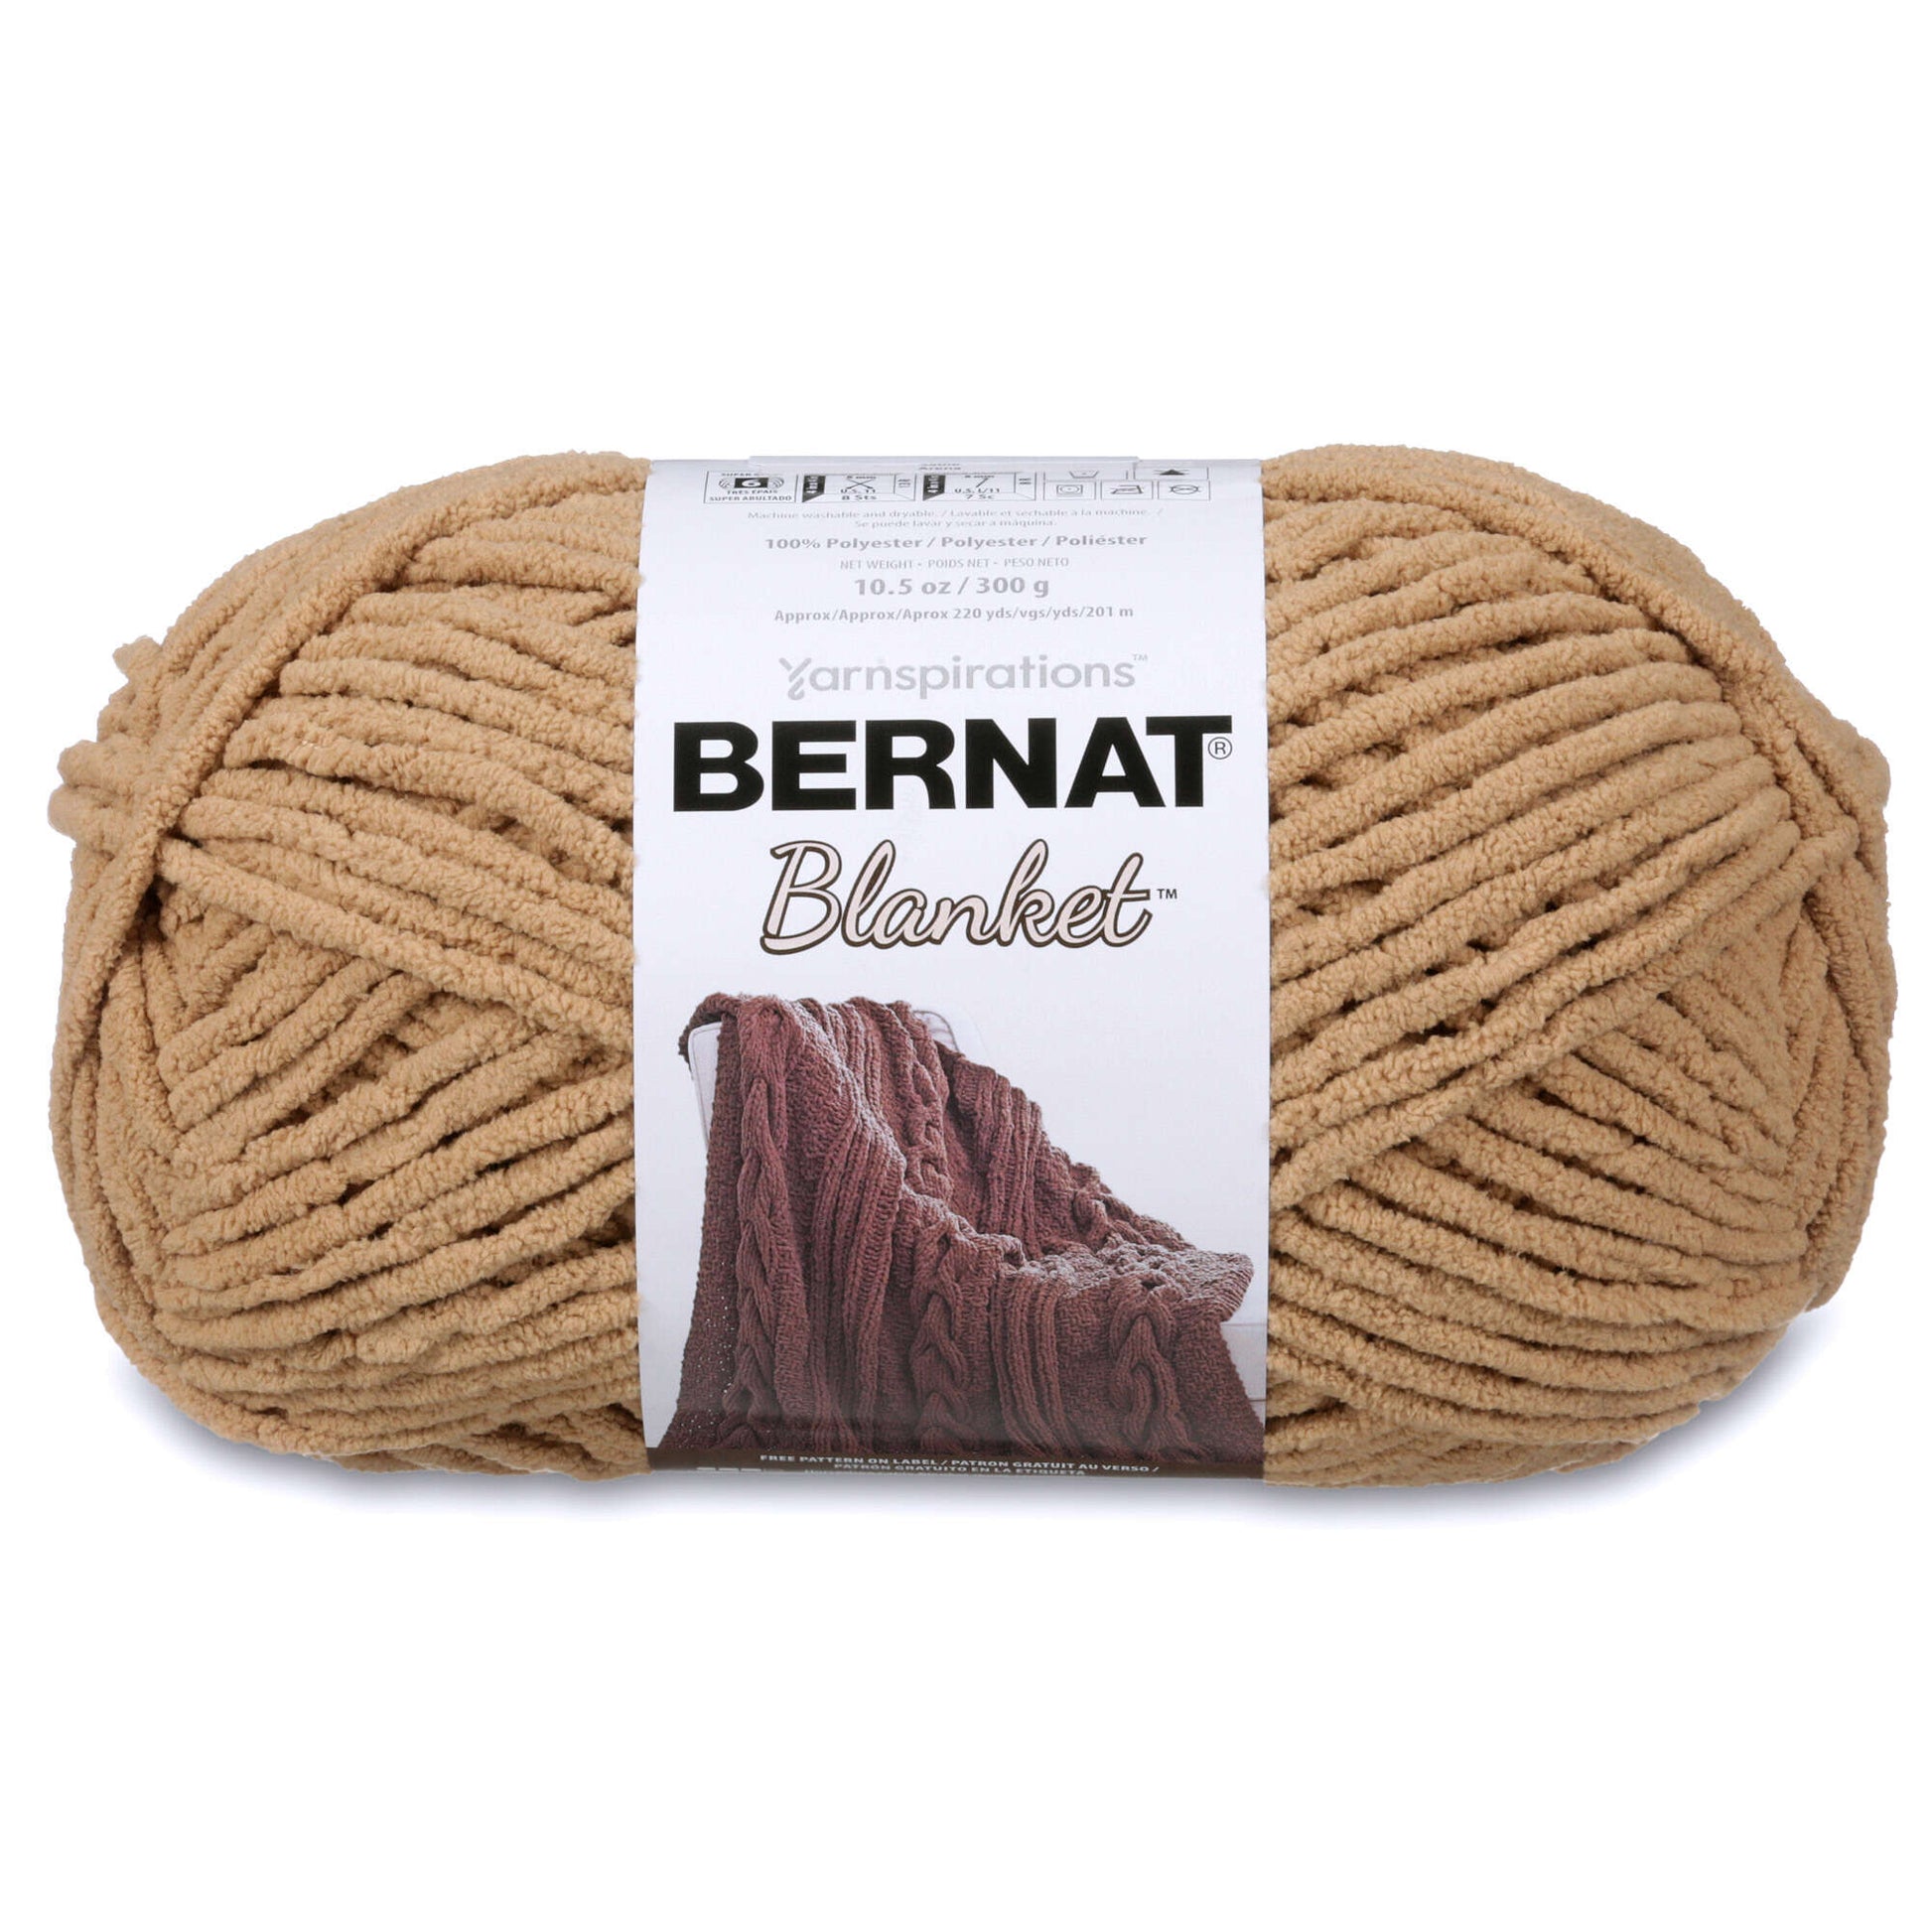 Bernat Blanket Yarn (300g/10.5oz) Sand